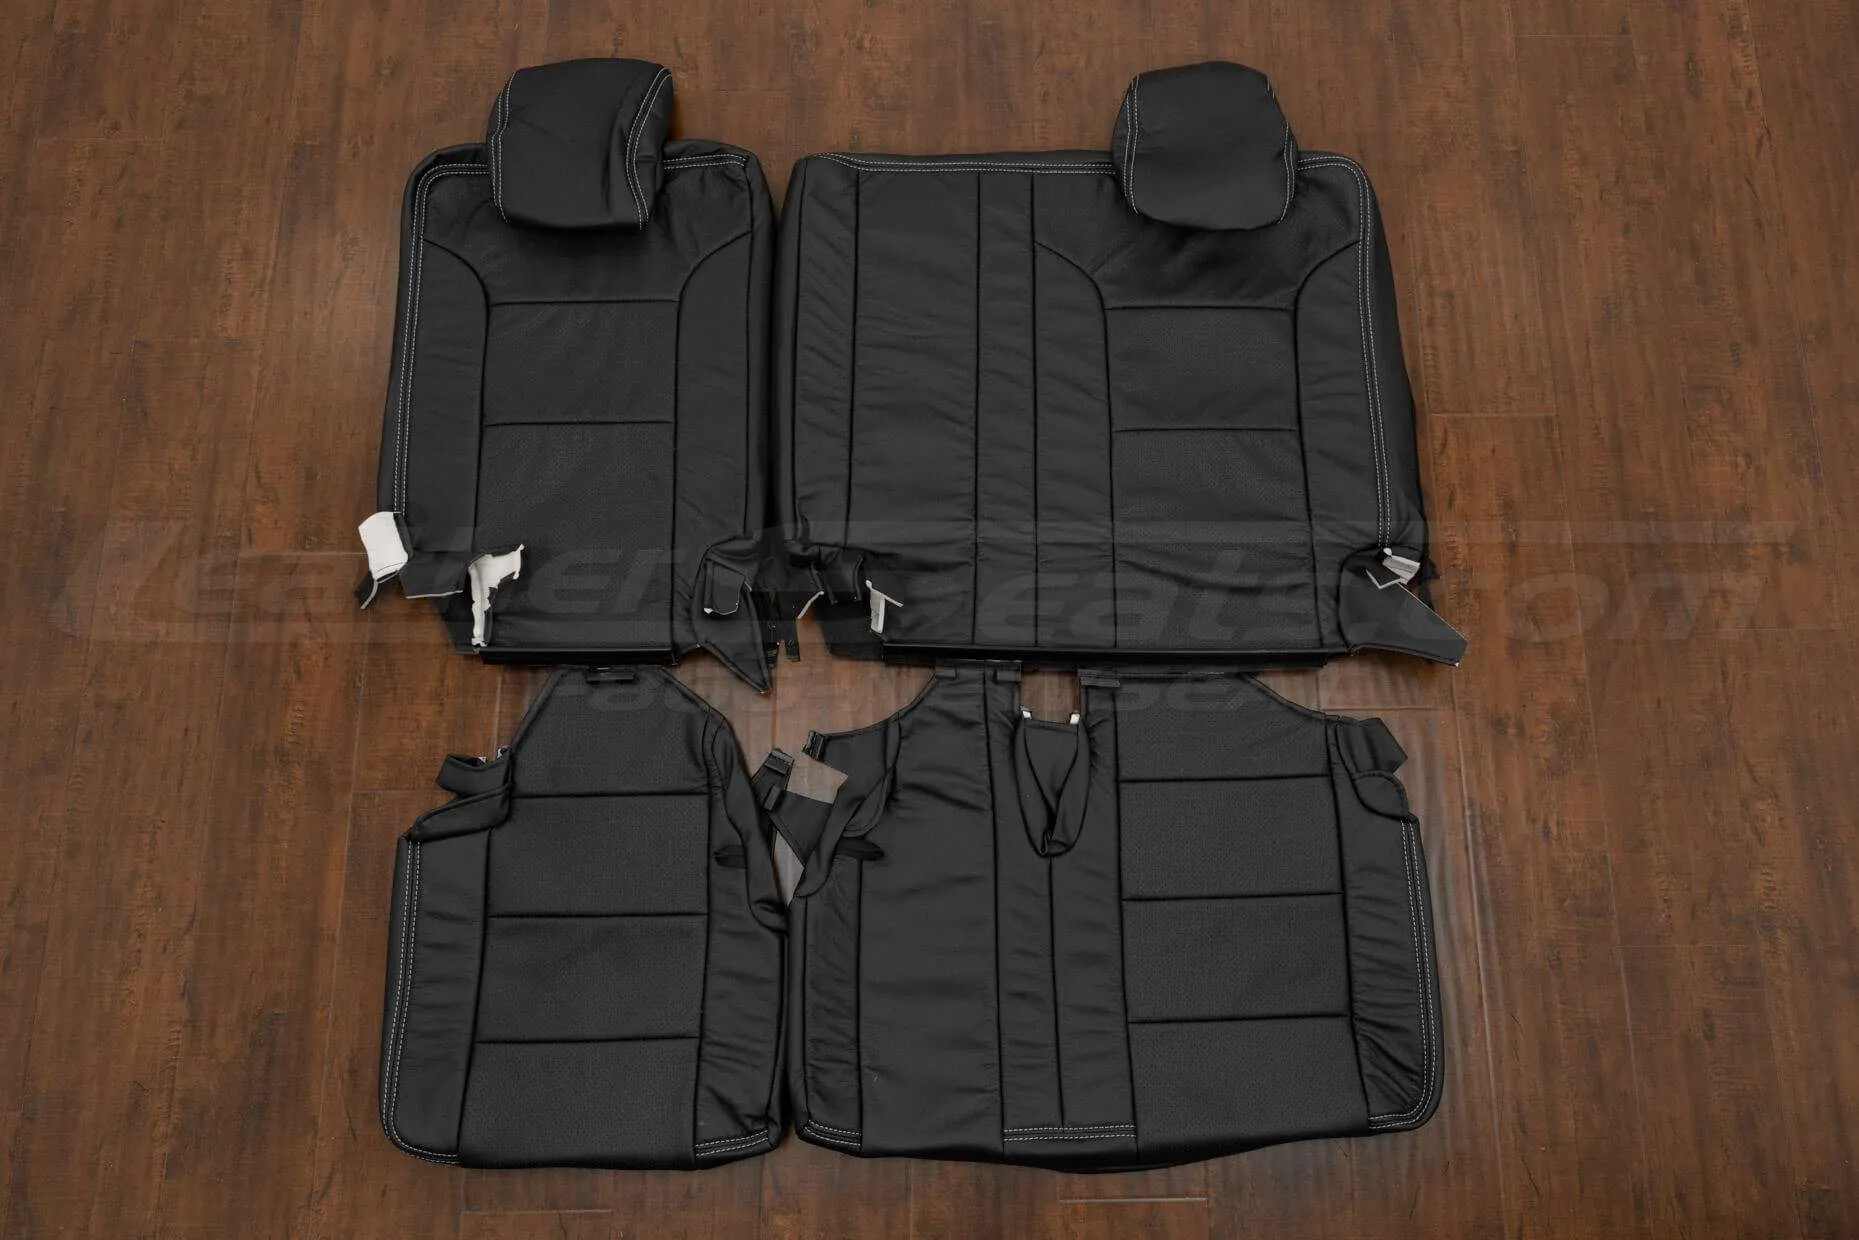 GMC Yukon Leather Seat Kit - Black - Third Row leather upholstery